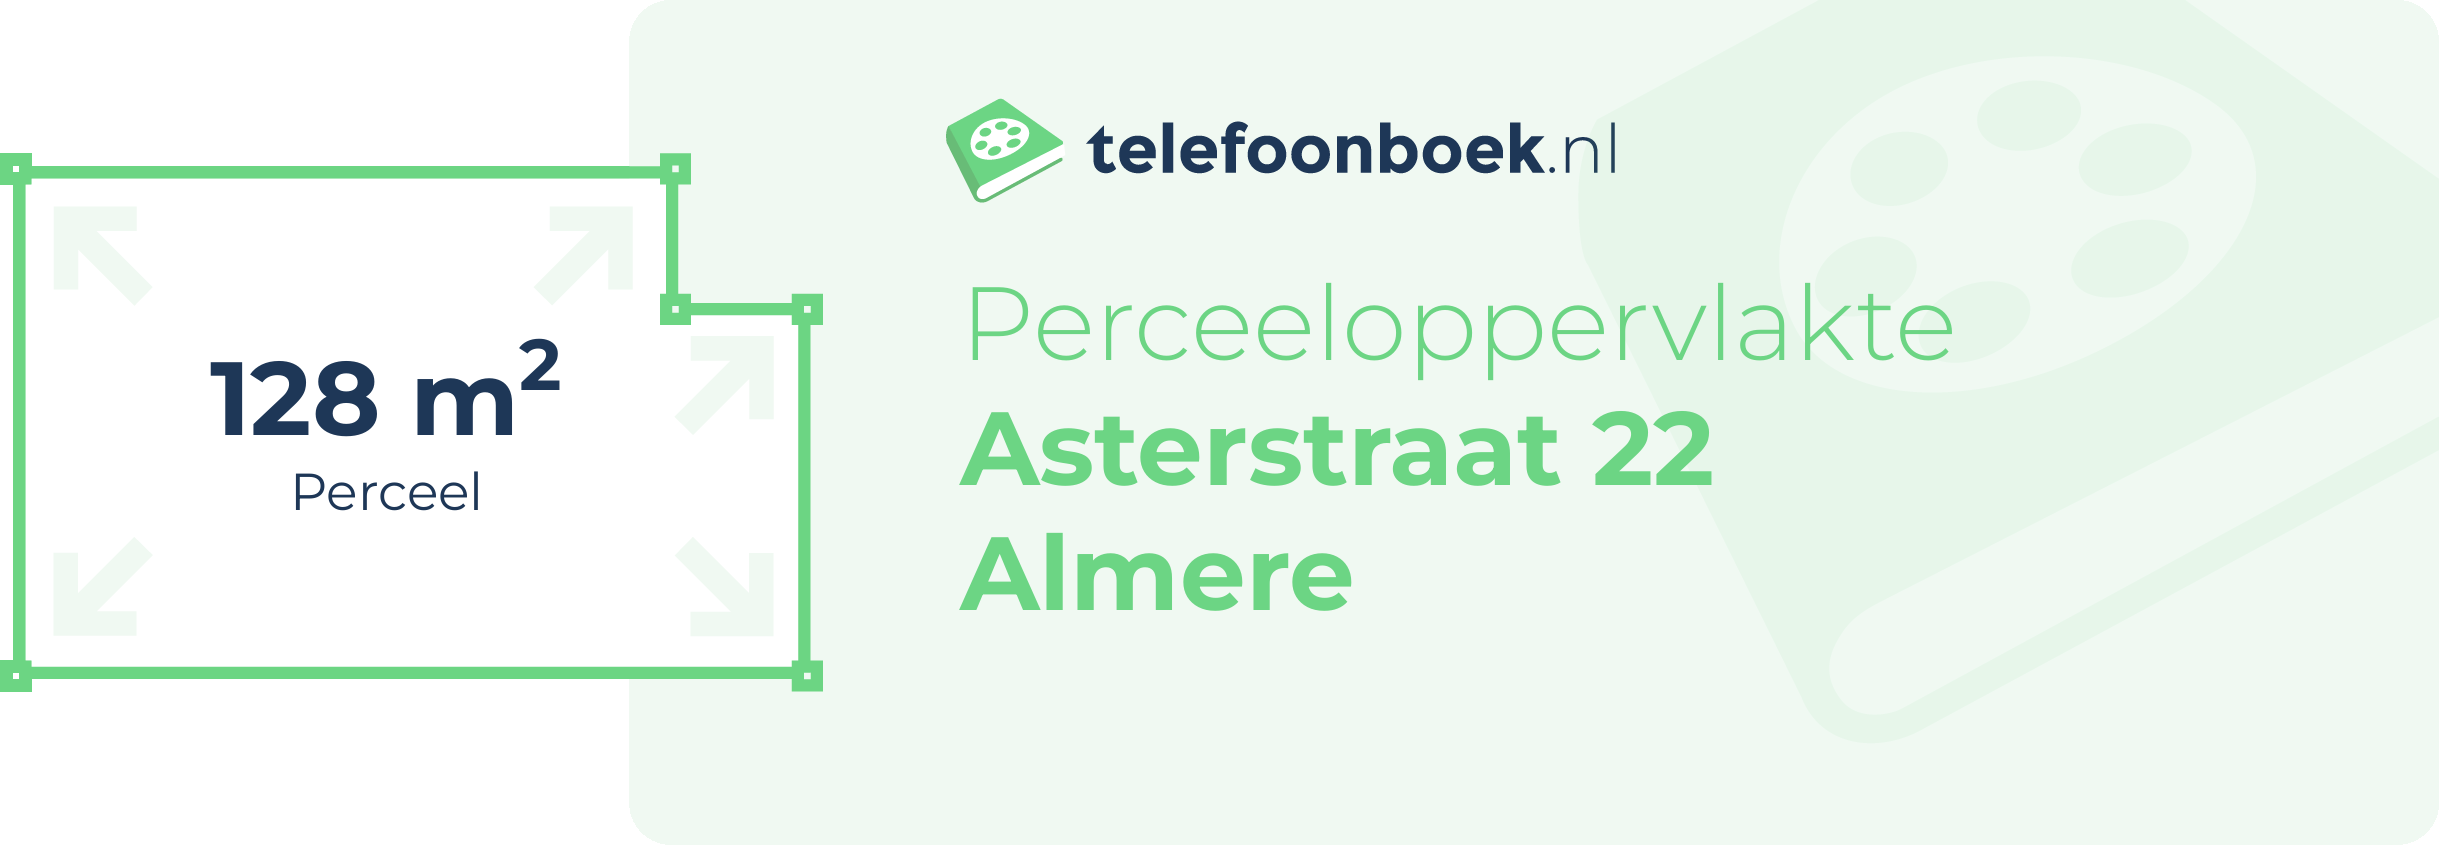 Perceeloppervlakte Asterstraat 22 Almere